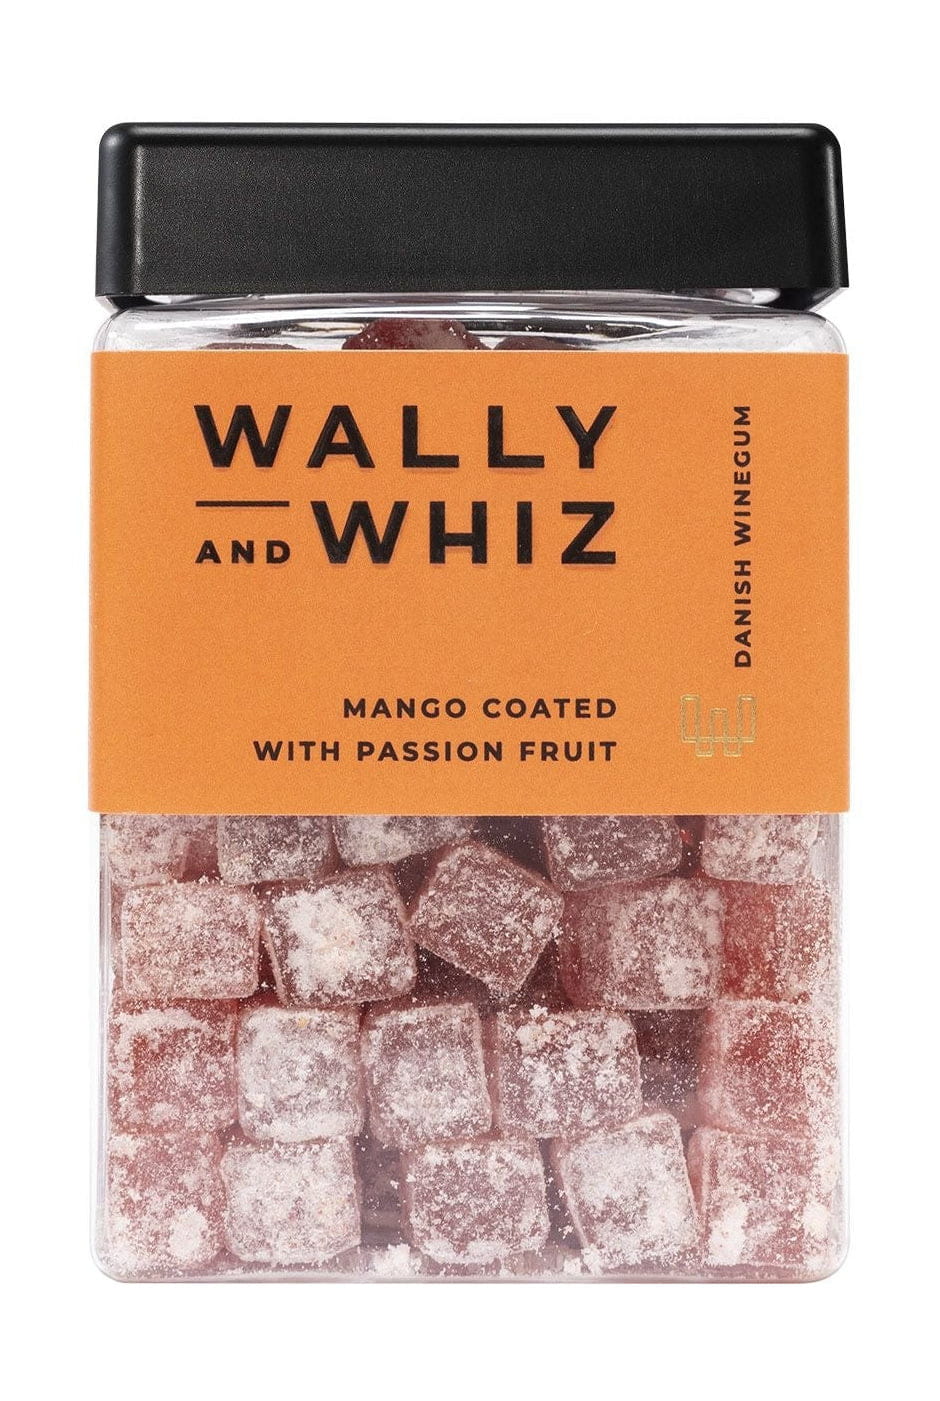 Wally And Whiz Wijngomkubus, mangomutgom met passievrucht, 240 g